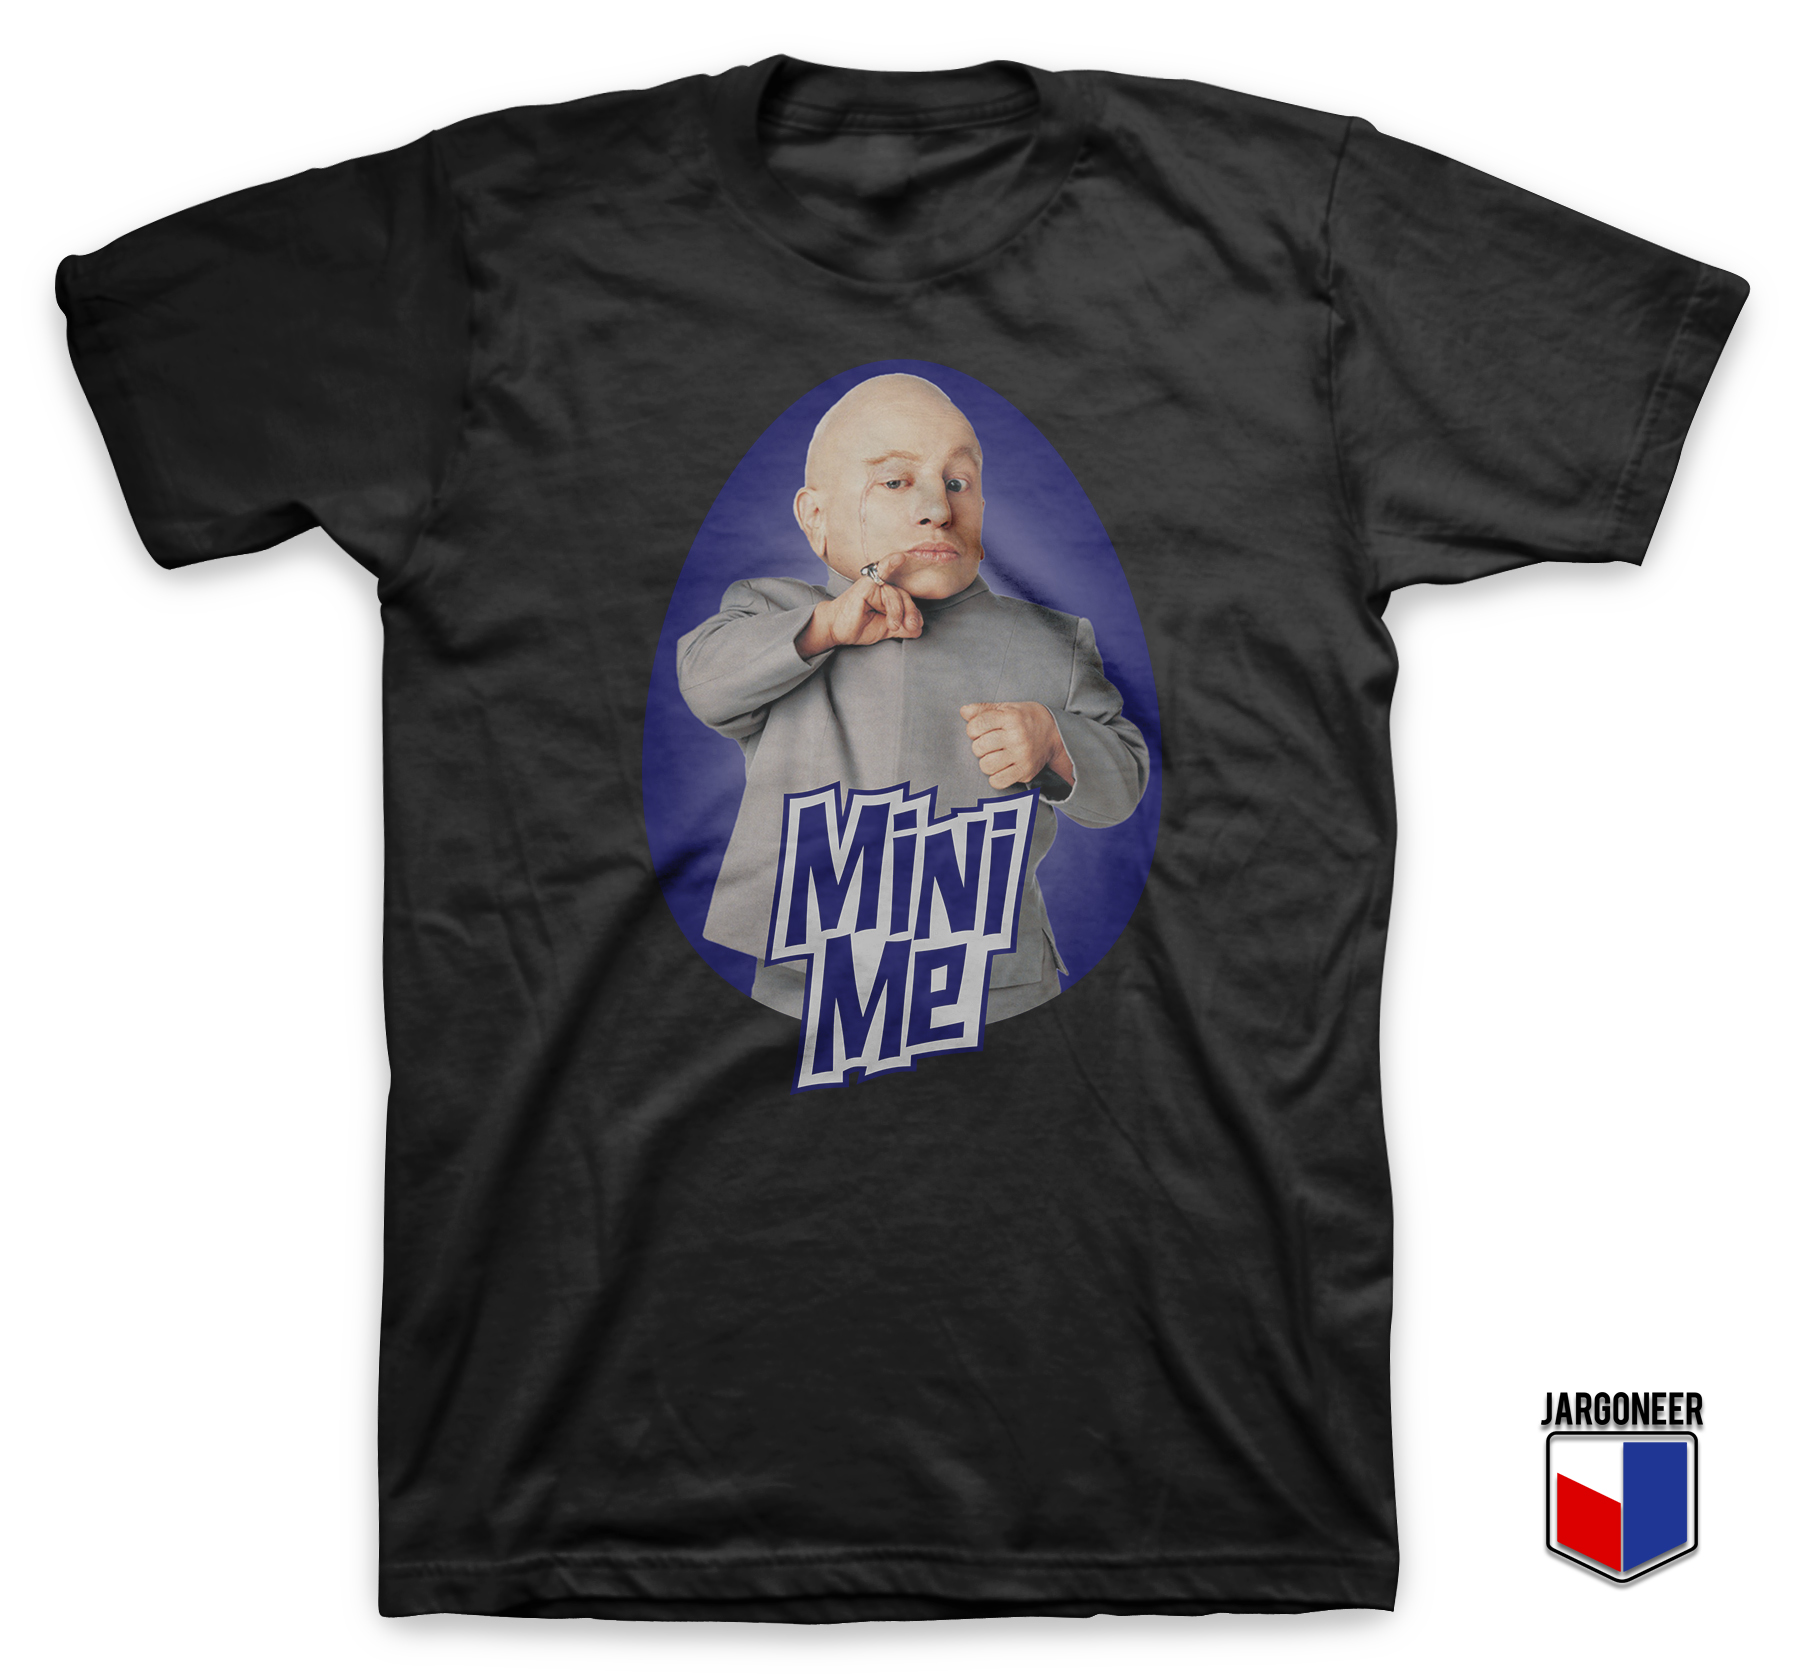 Mini Me Black TShirt - Shop Unique Graphic Cool Shirt Designs